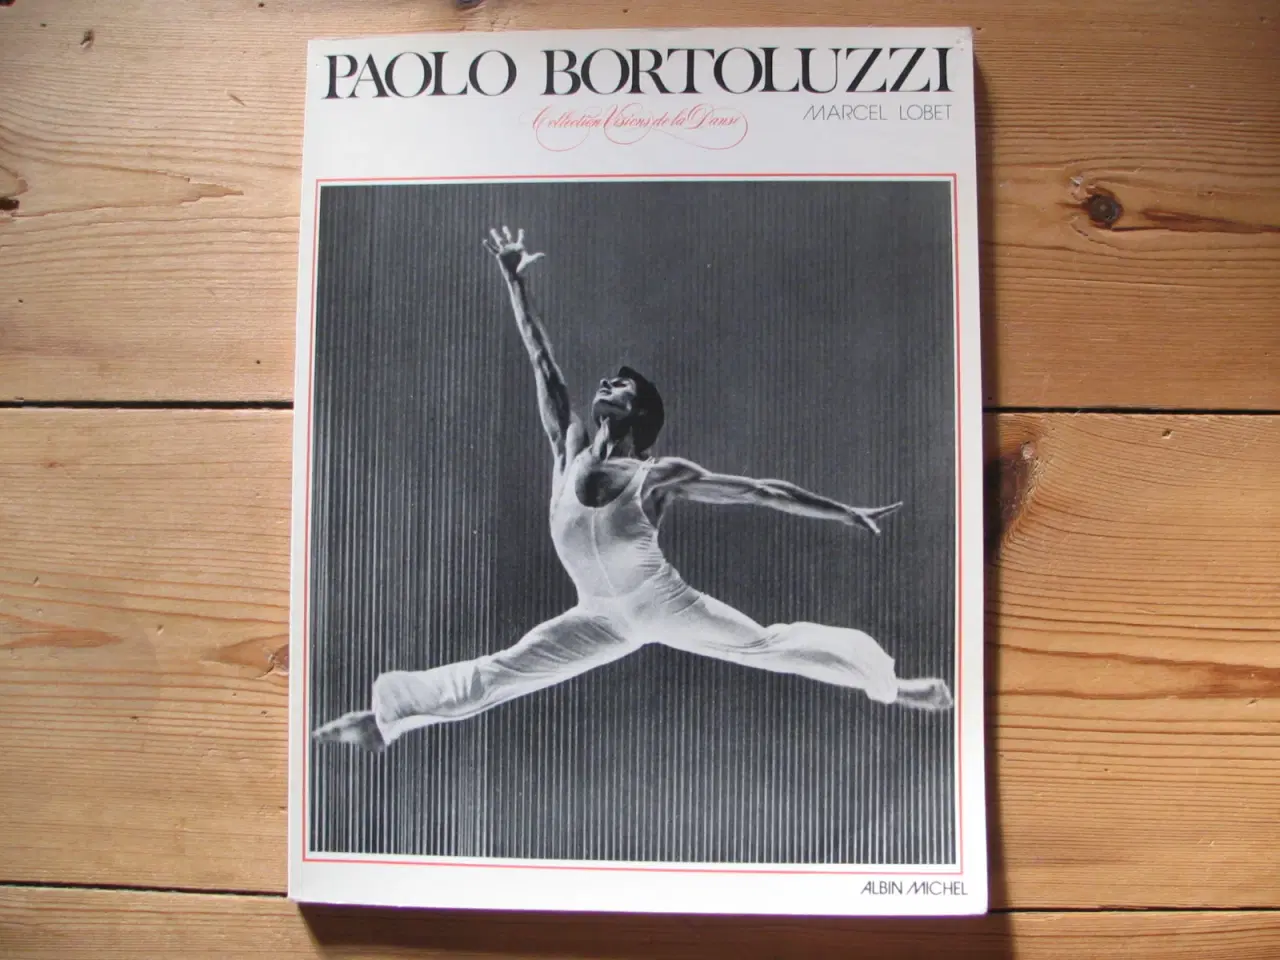 Billede 1 - Balletdanseren Paolo Bortoluzzi (1938-1993)